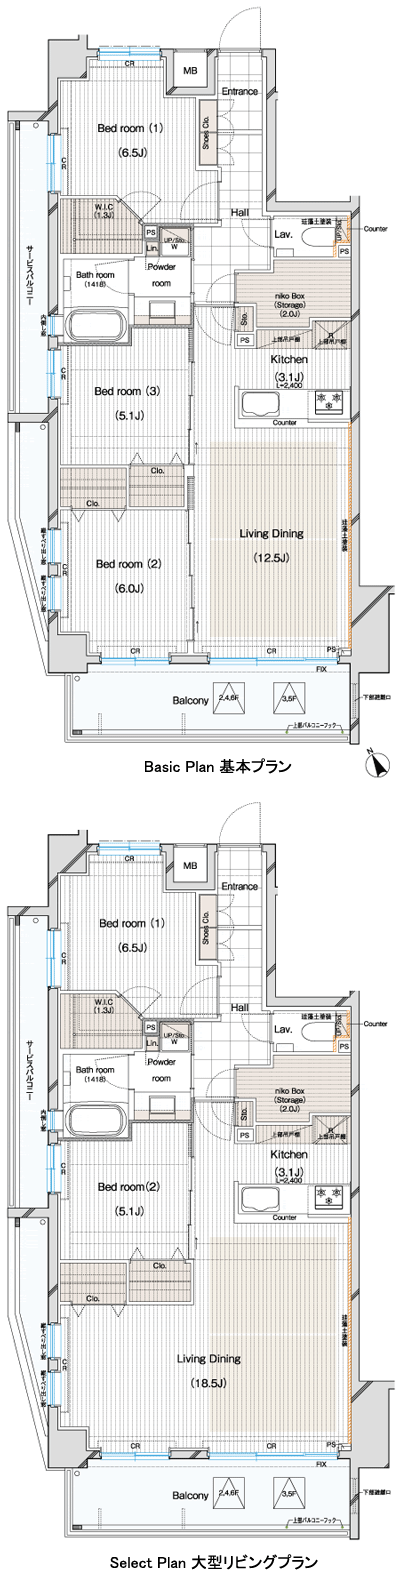 Floor: 3LDK, occupied area: 78.11 sq m, Price: 42,300,000 yen, now on sale